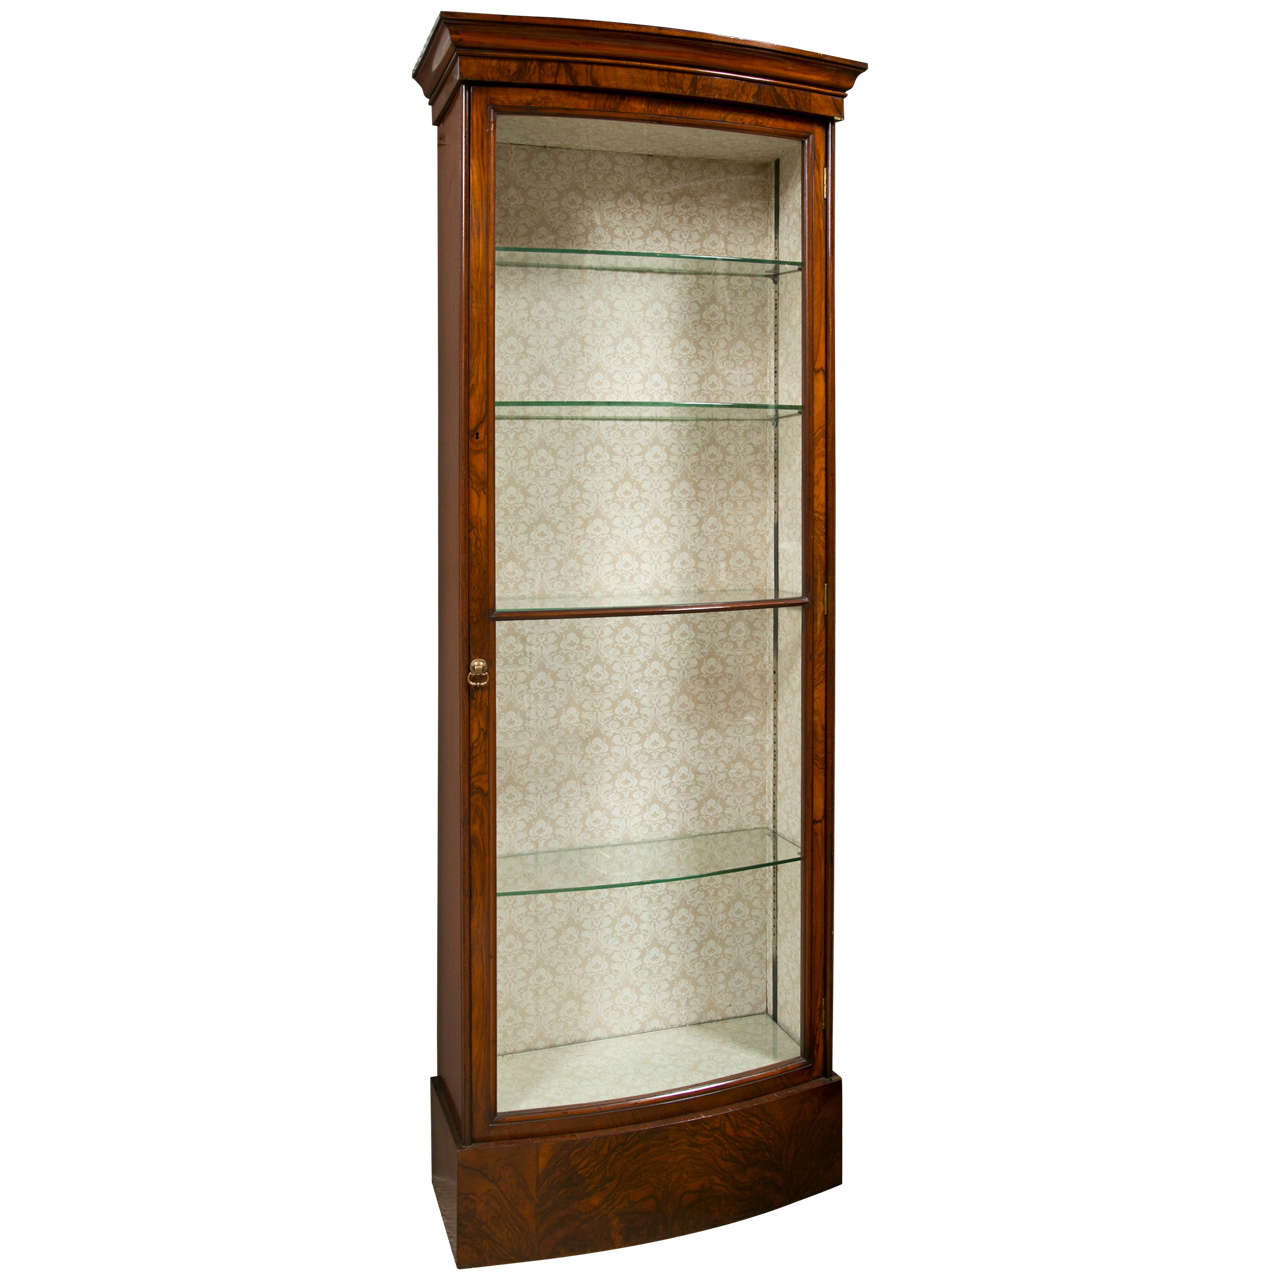 19th c Vitrine / Bookcase with Glass Door